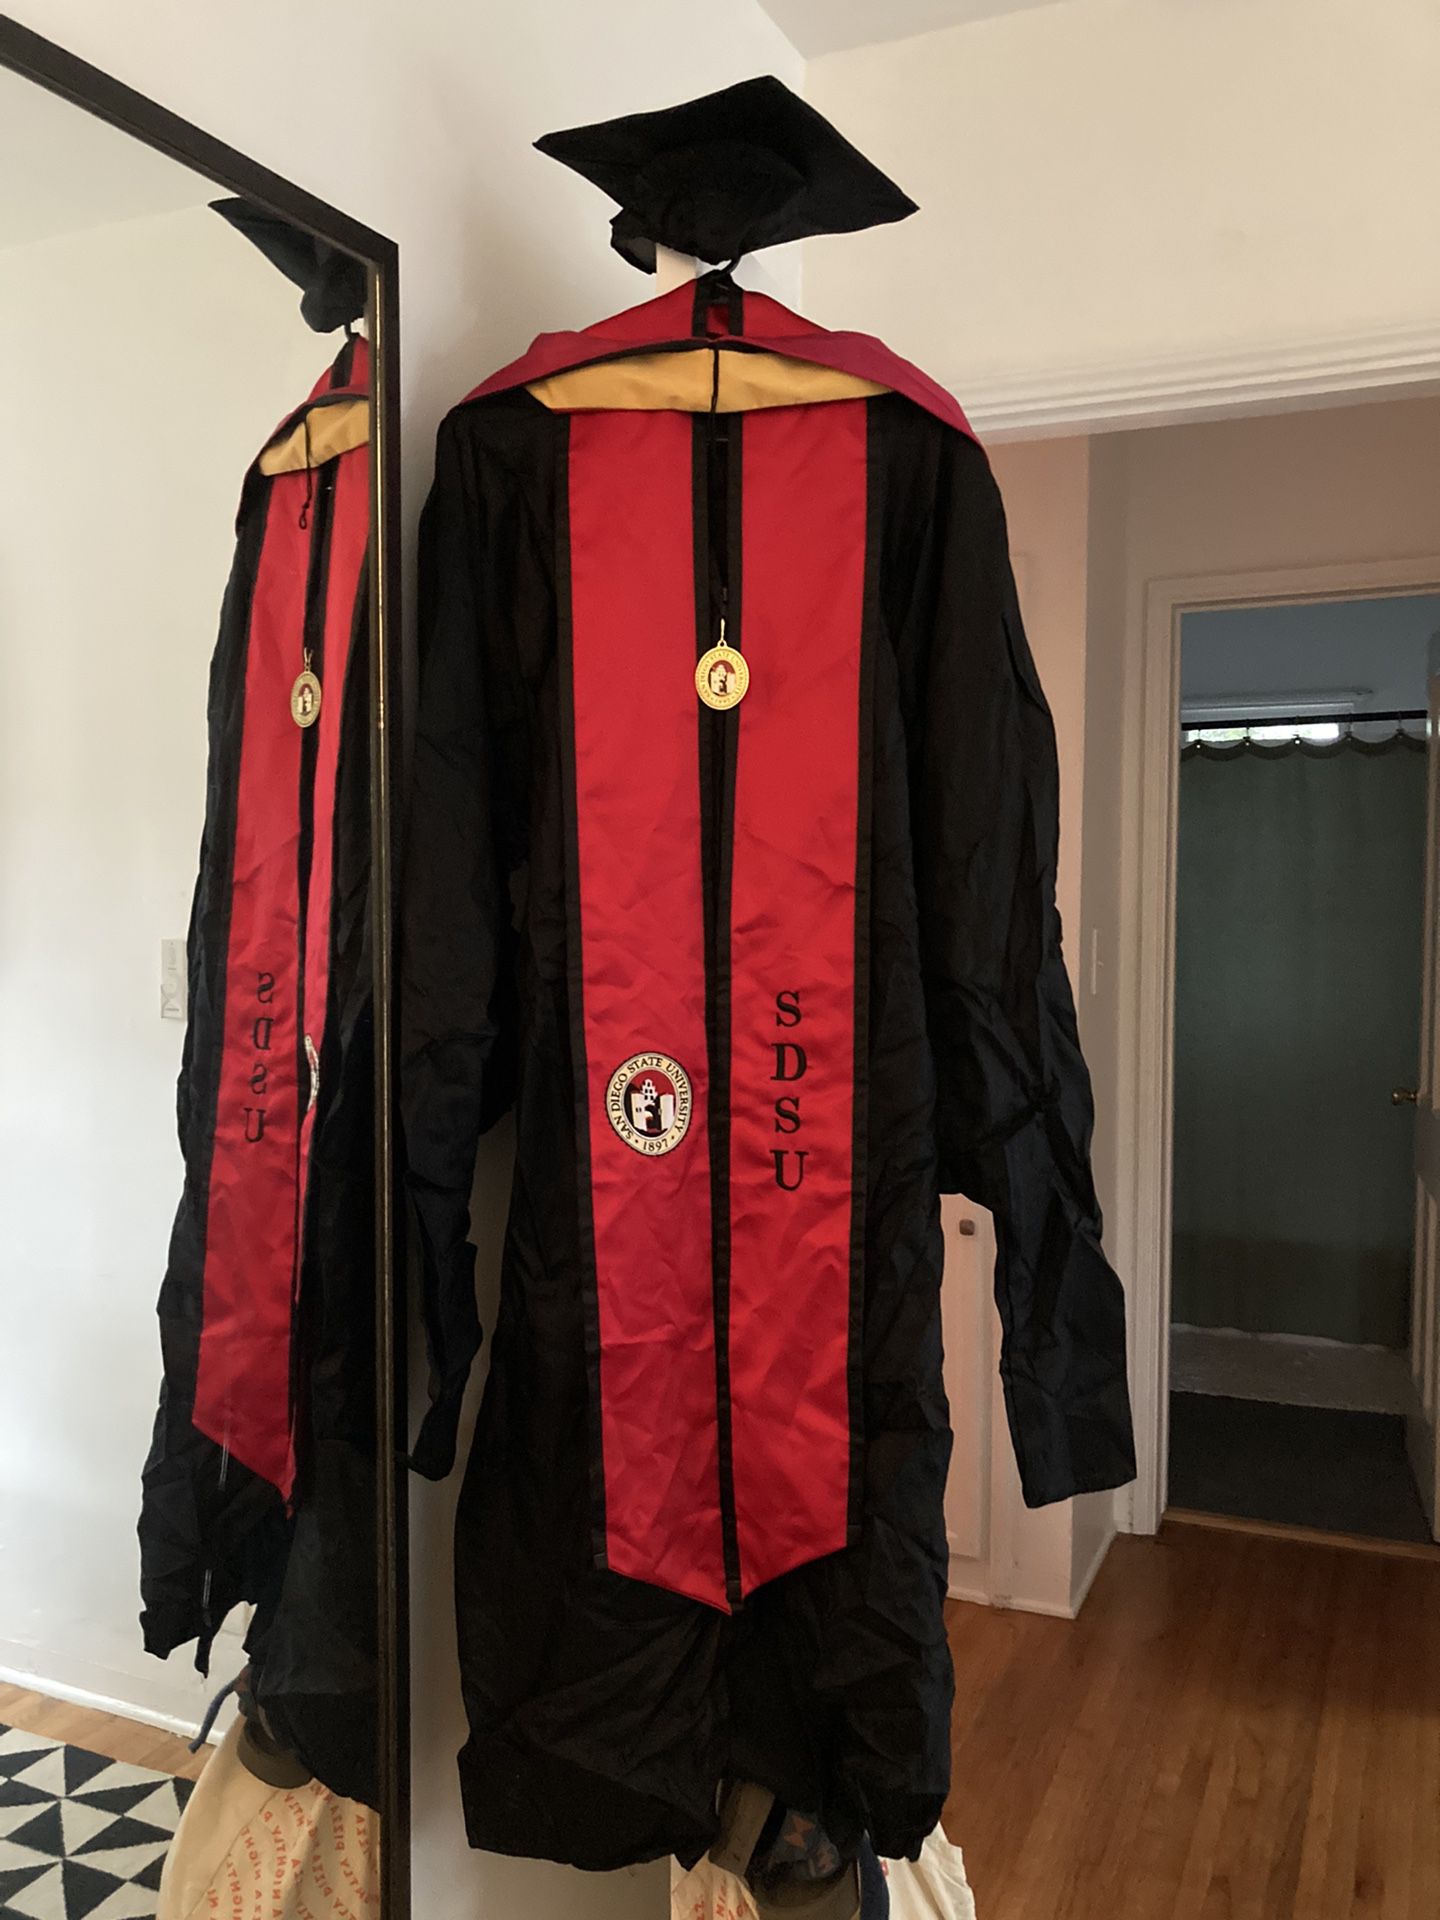 SDSU Graduation Gown Regalia (Master’s Hood included)